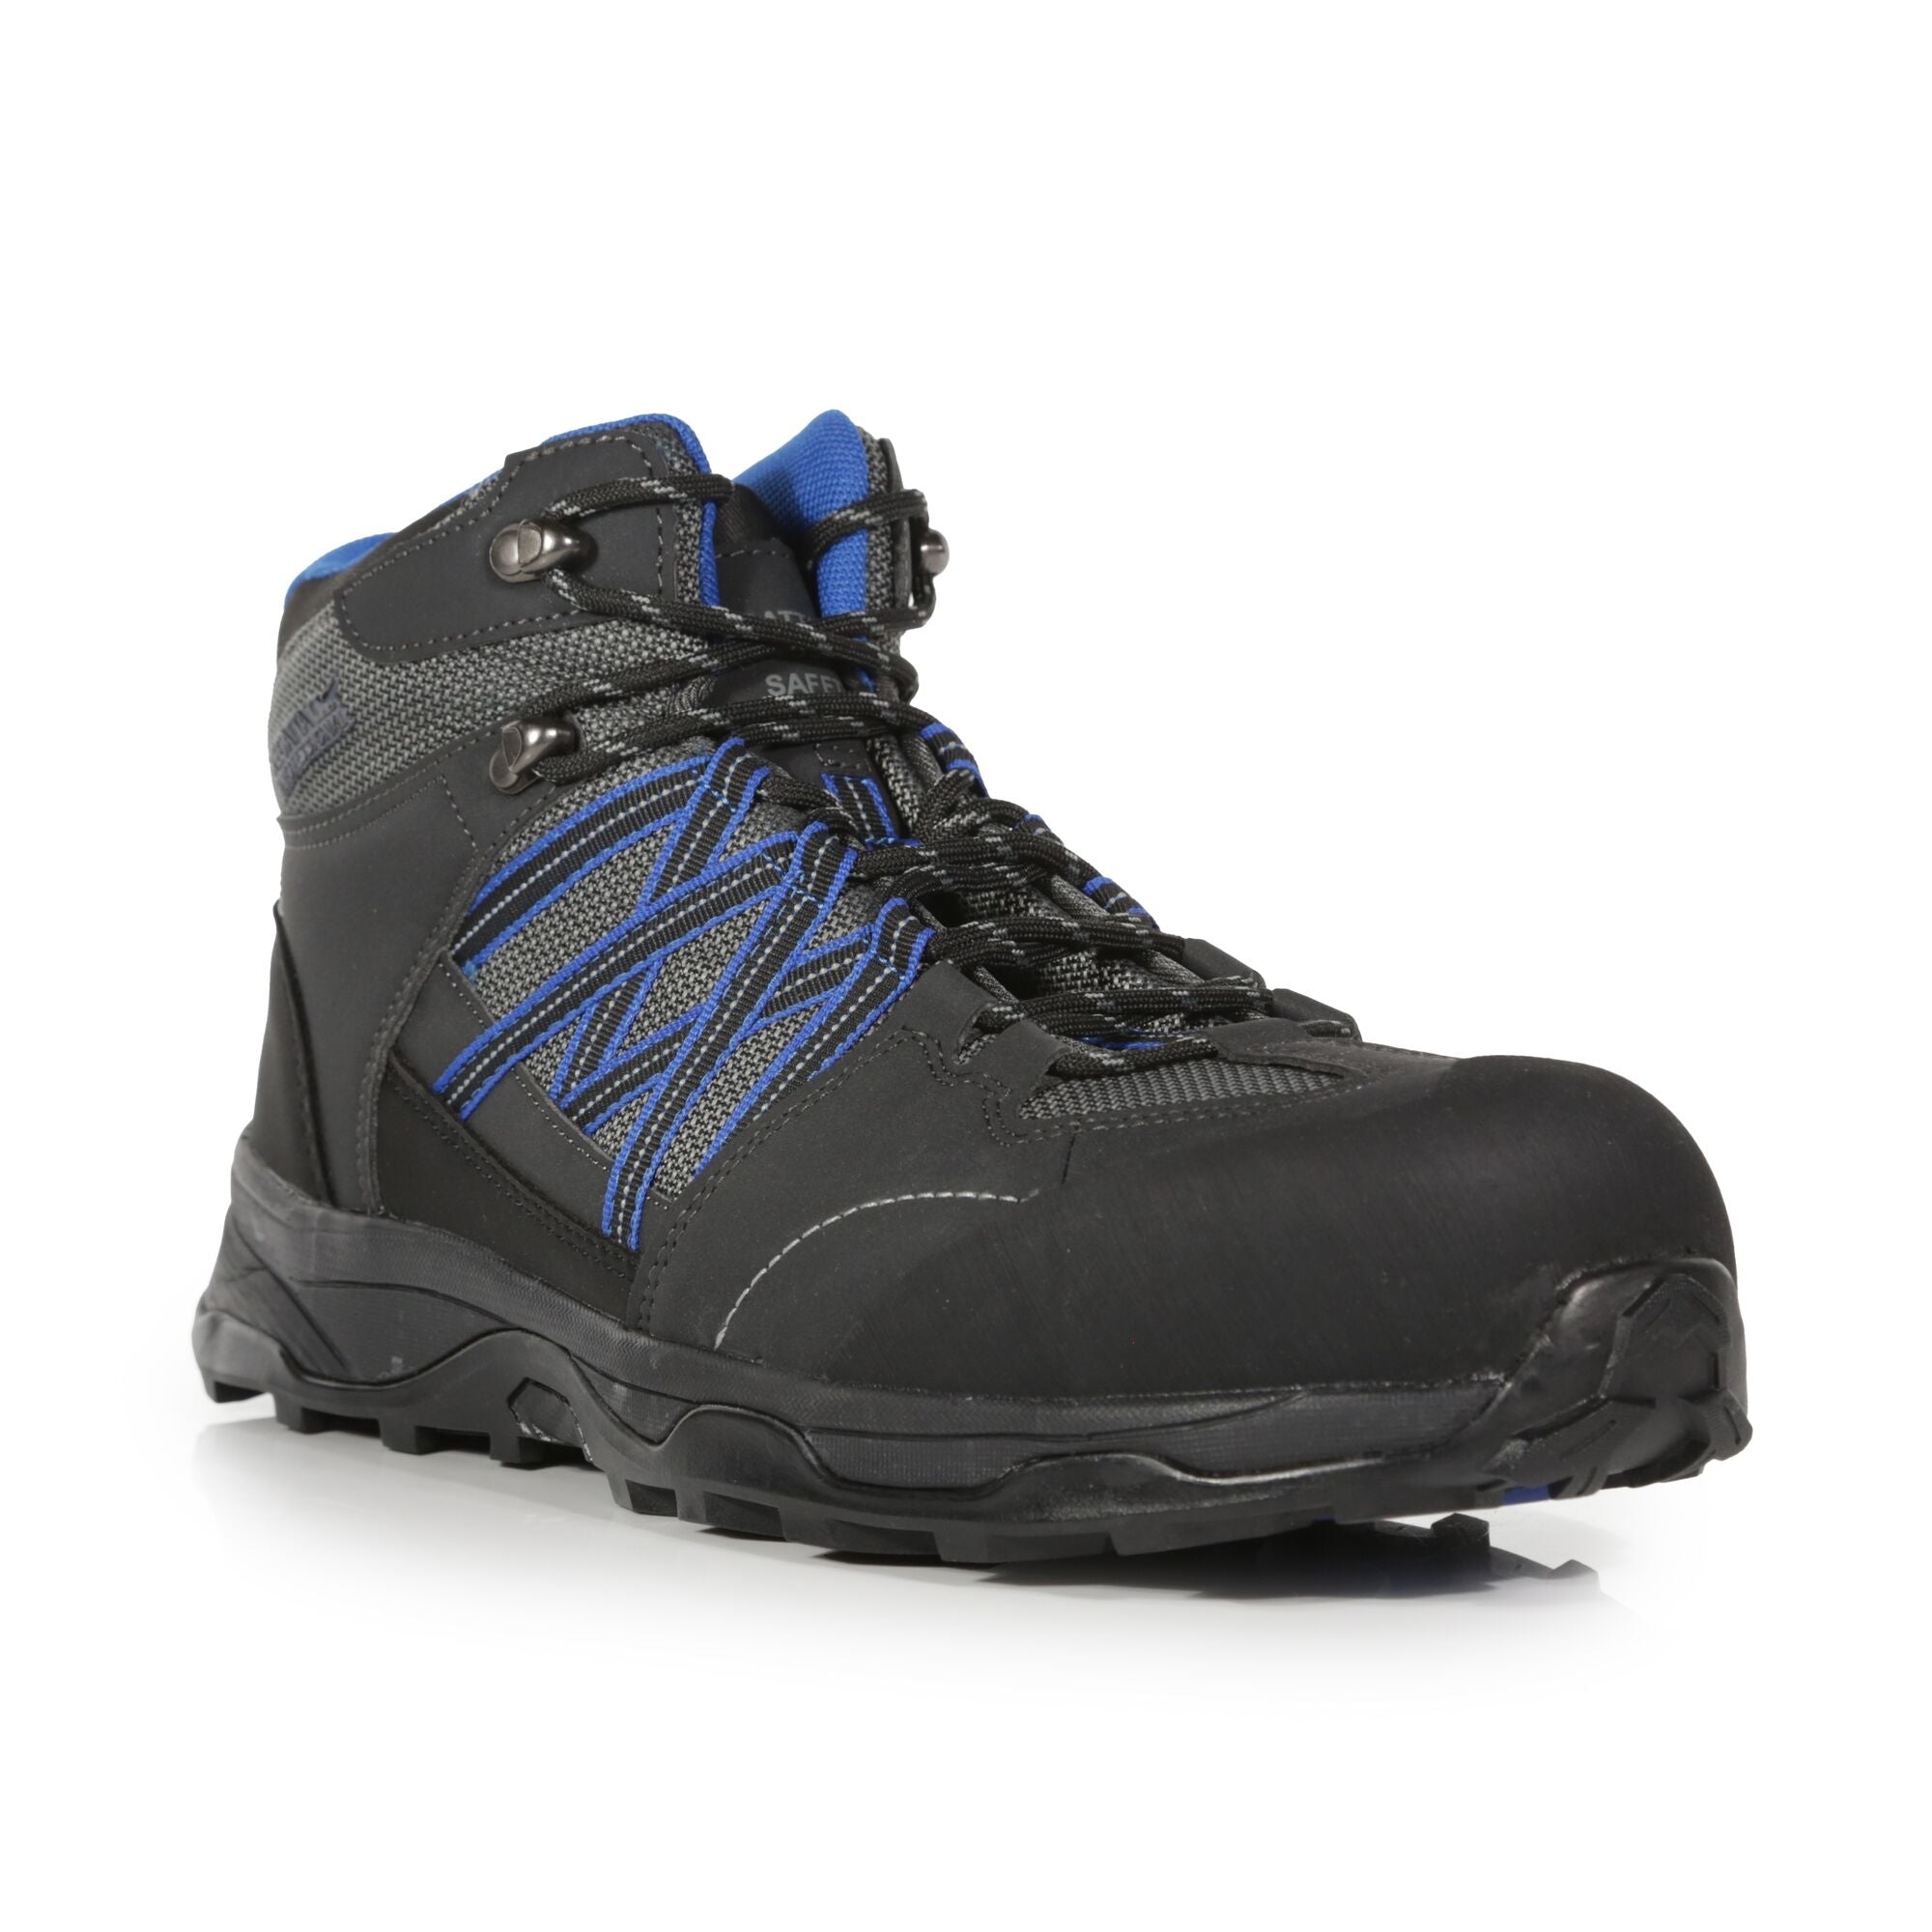 Regatta Claystone S3 Hiker Boots - Briar/Oxford Blue